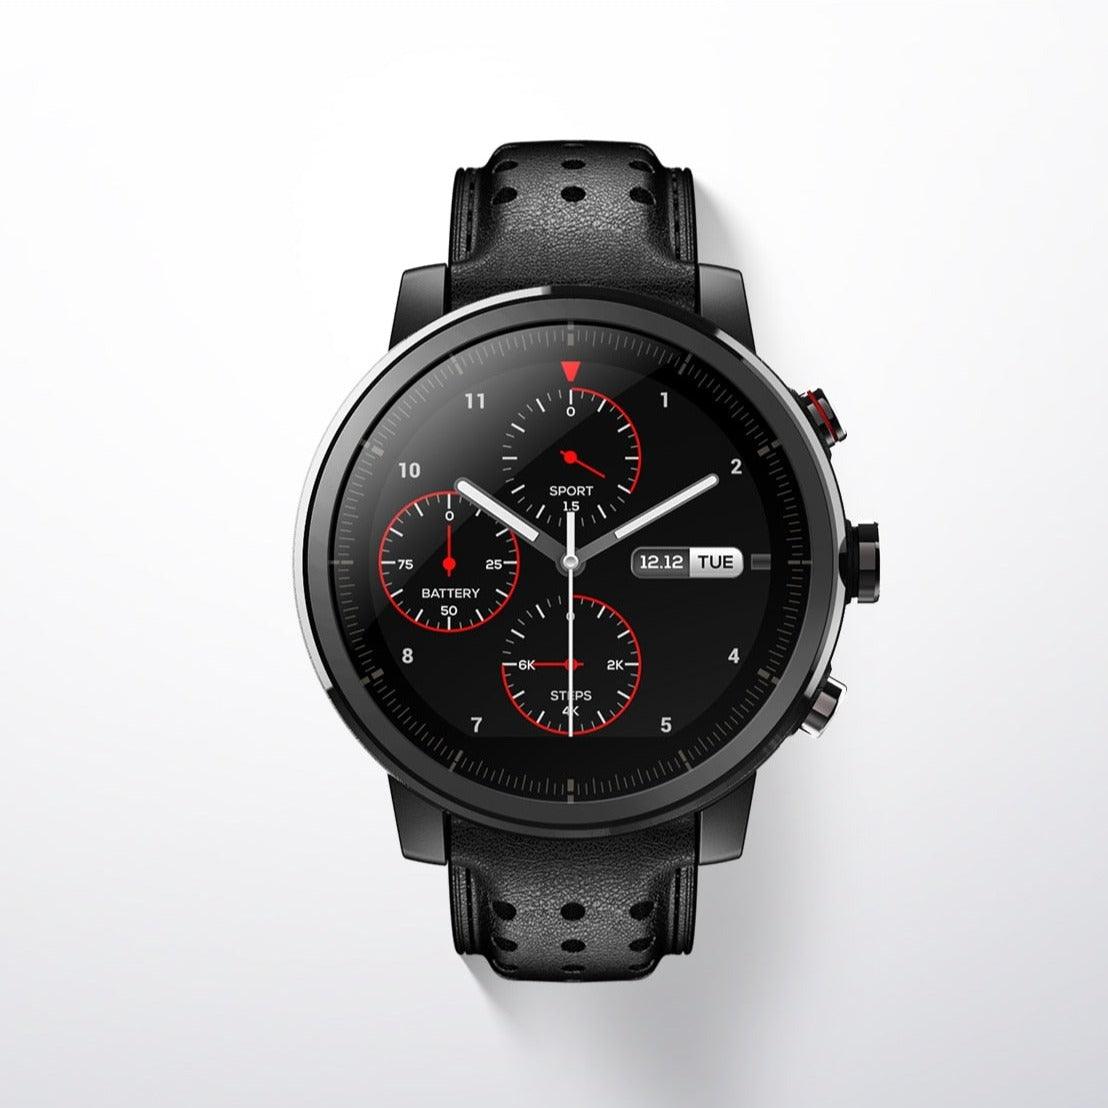 Amazfit Stratos+ Leather Strap Smartwatch - Professional